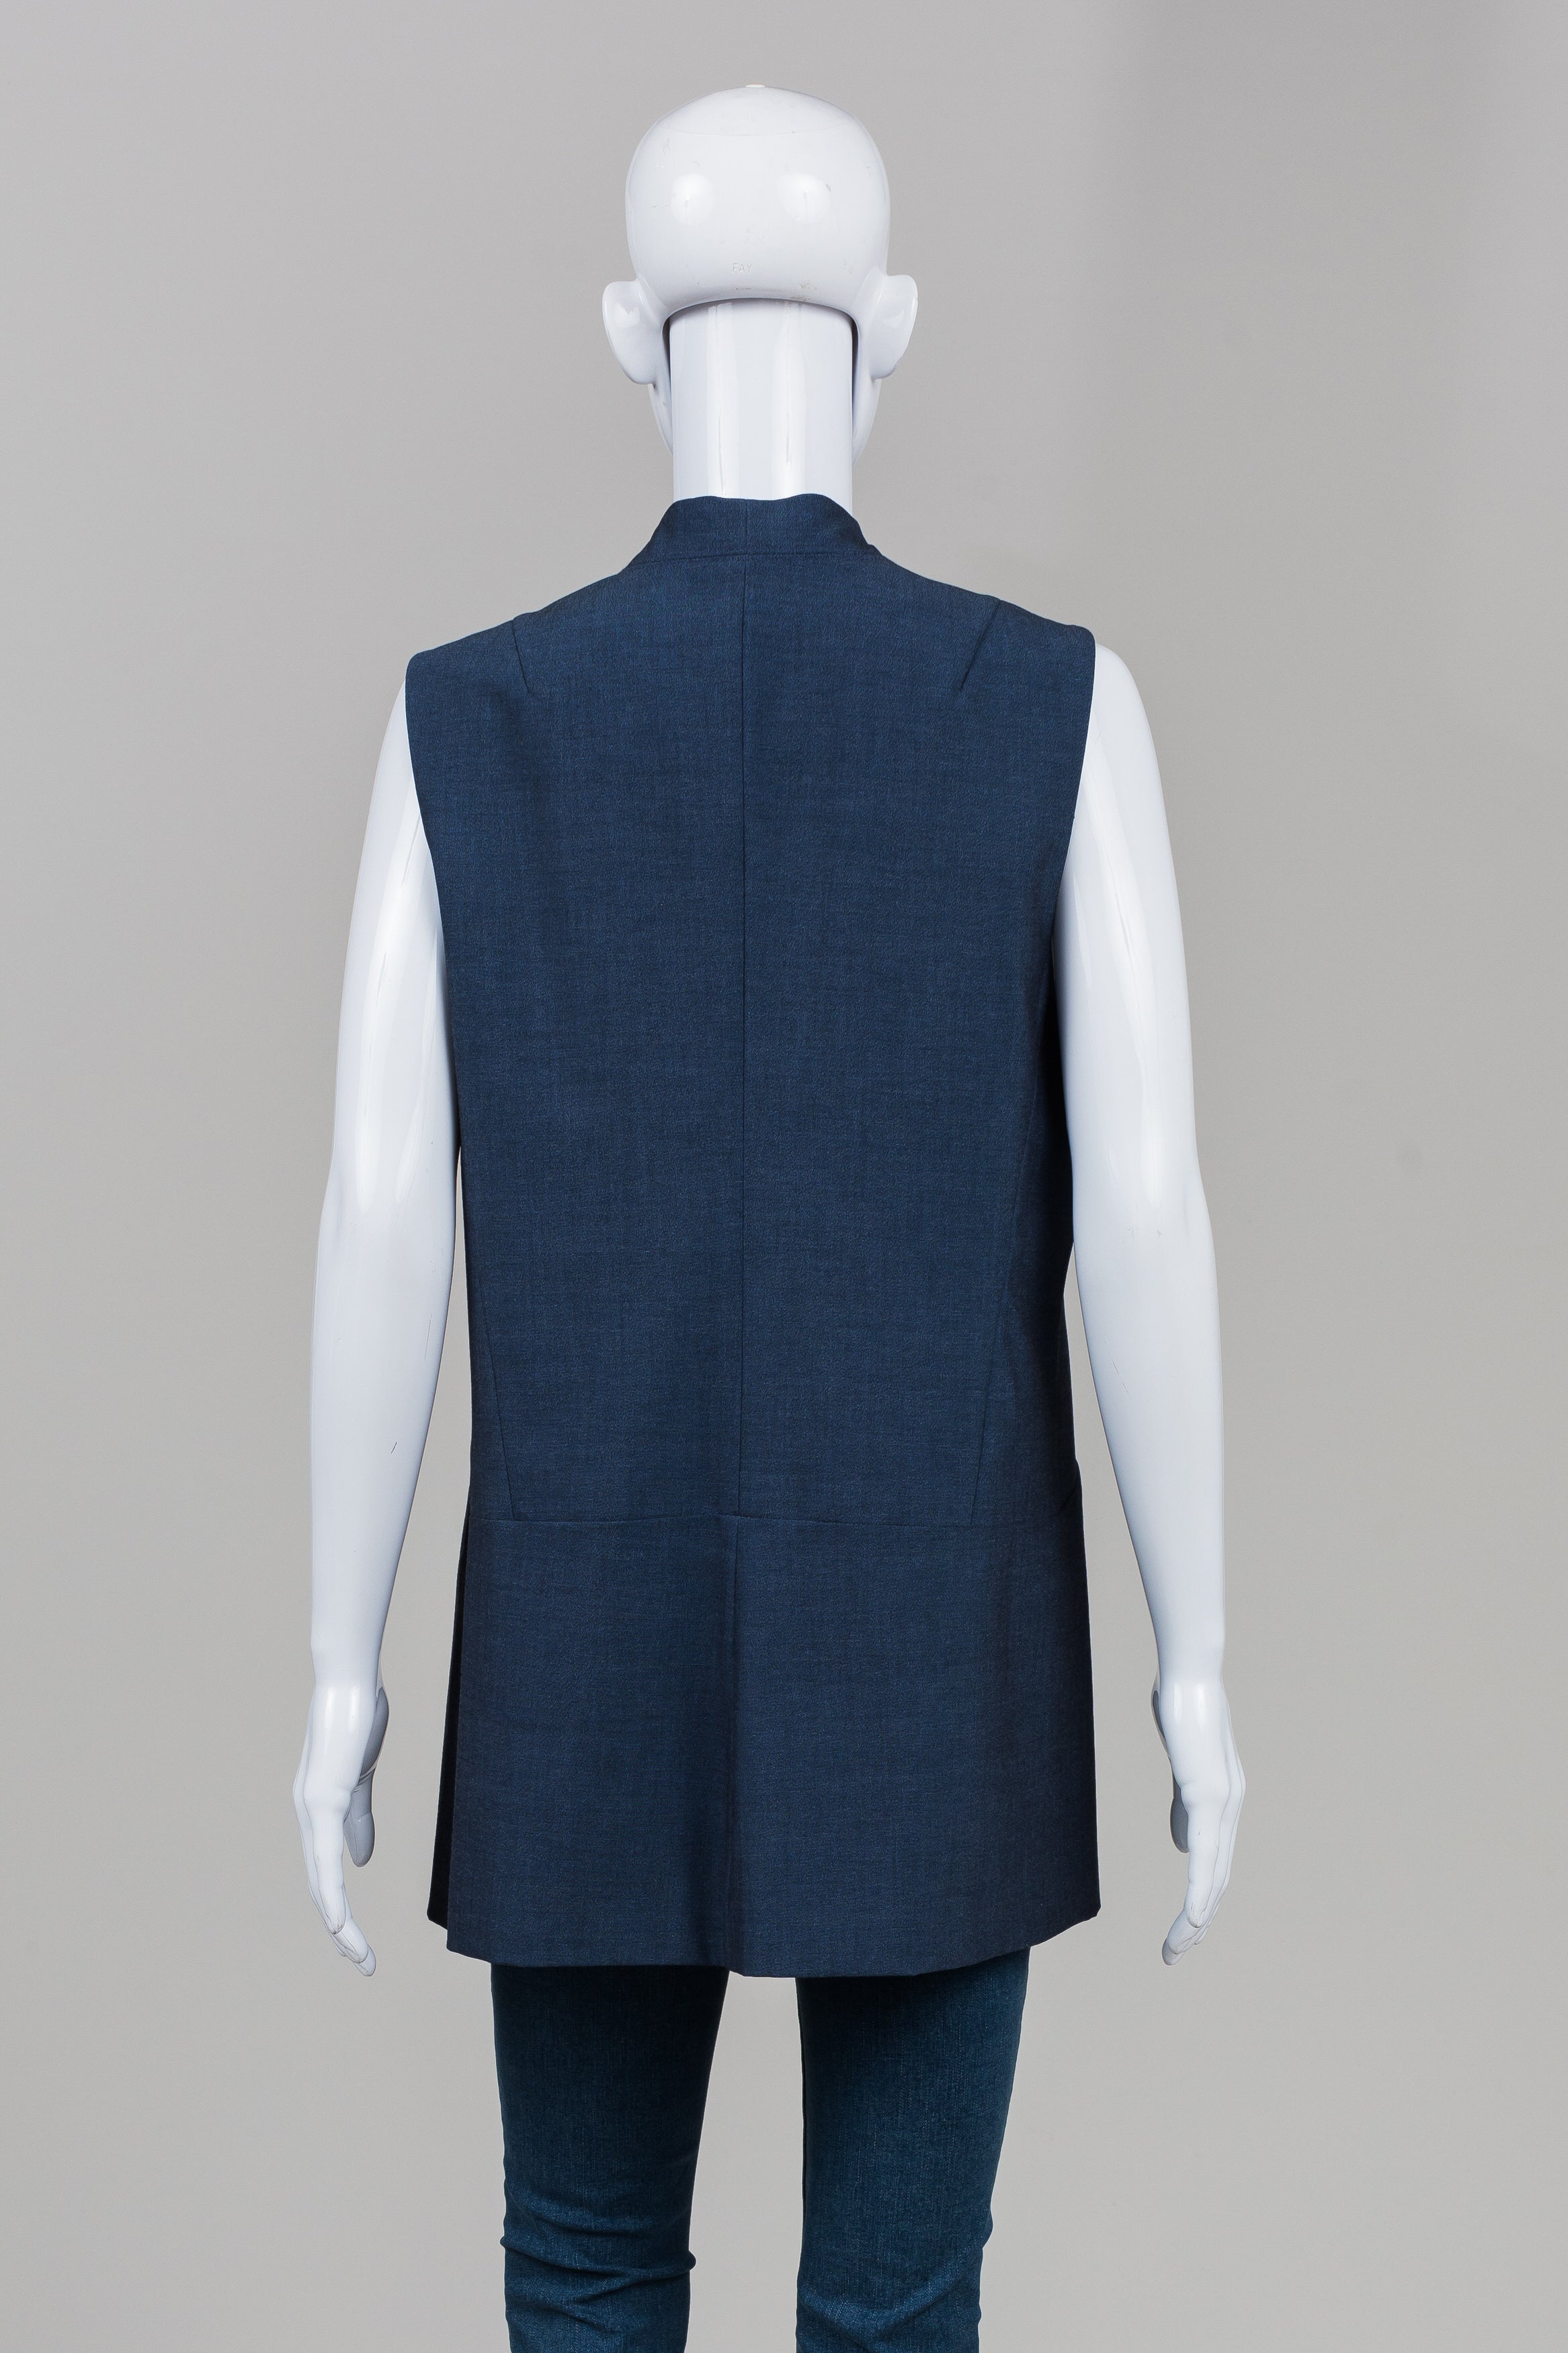 Willow & Thread Blue Melange Vest (16) *New w/ tags